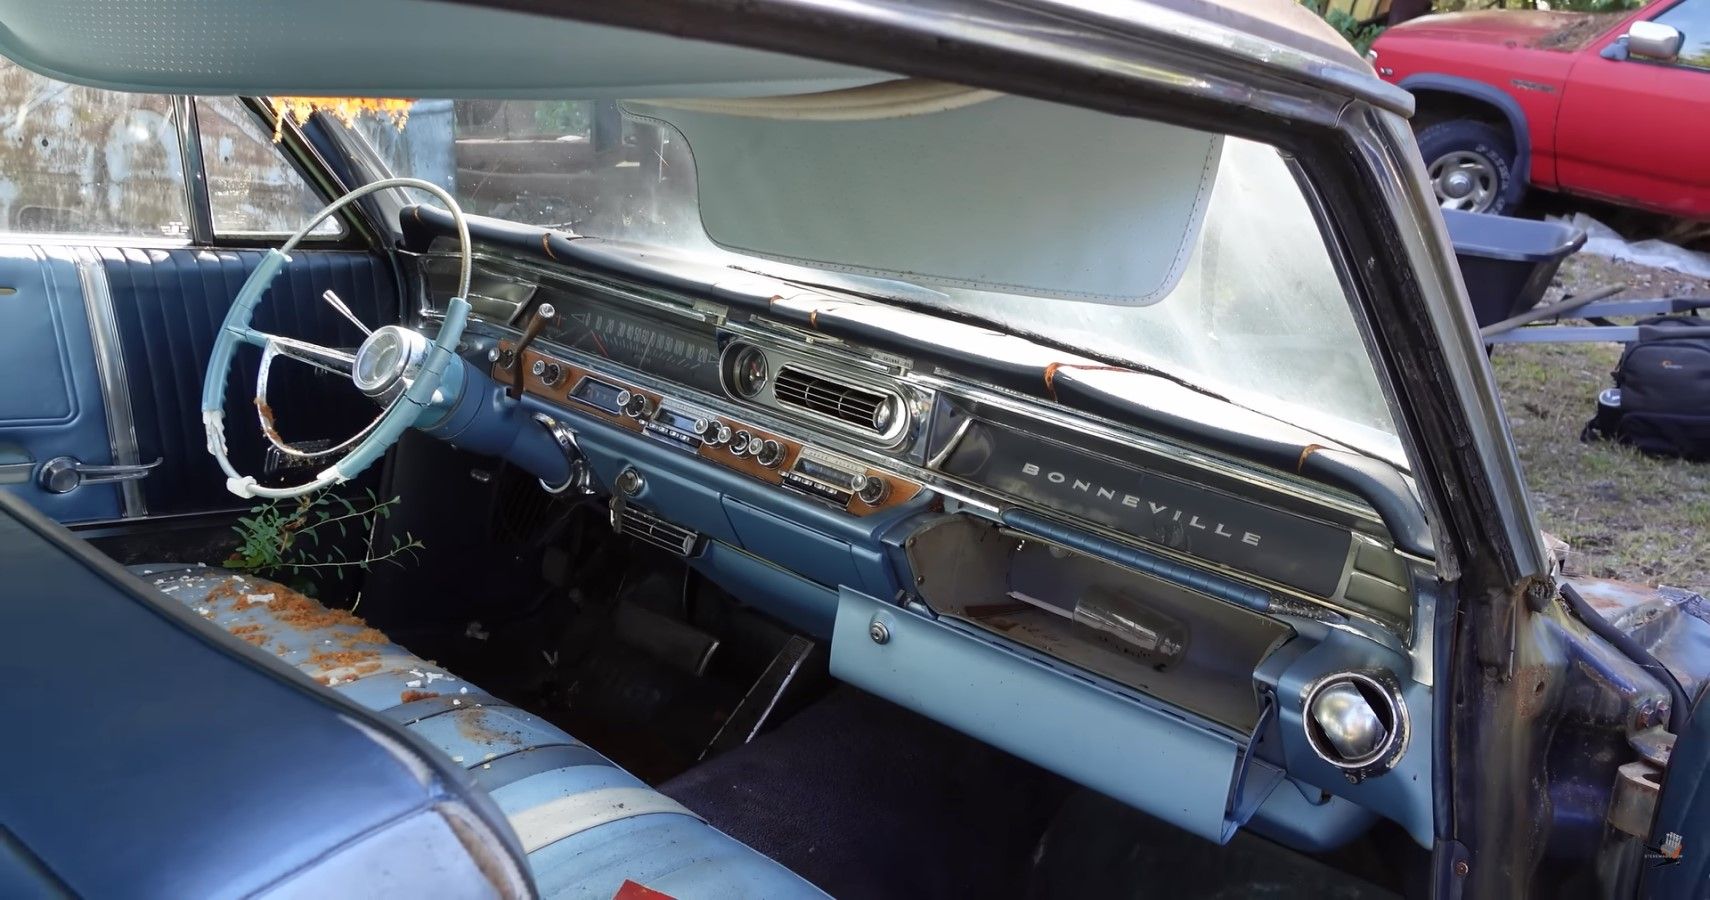 1963 Pontiac Bonneville interior view